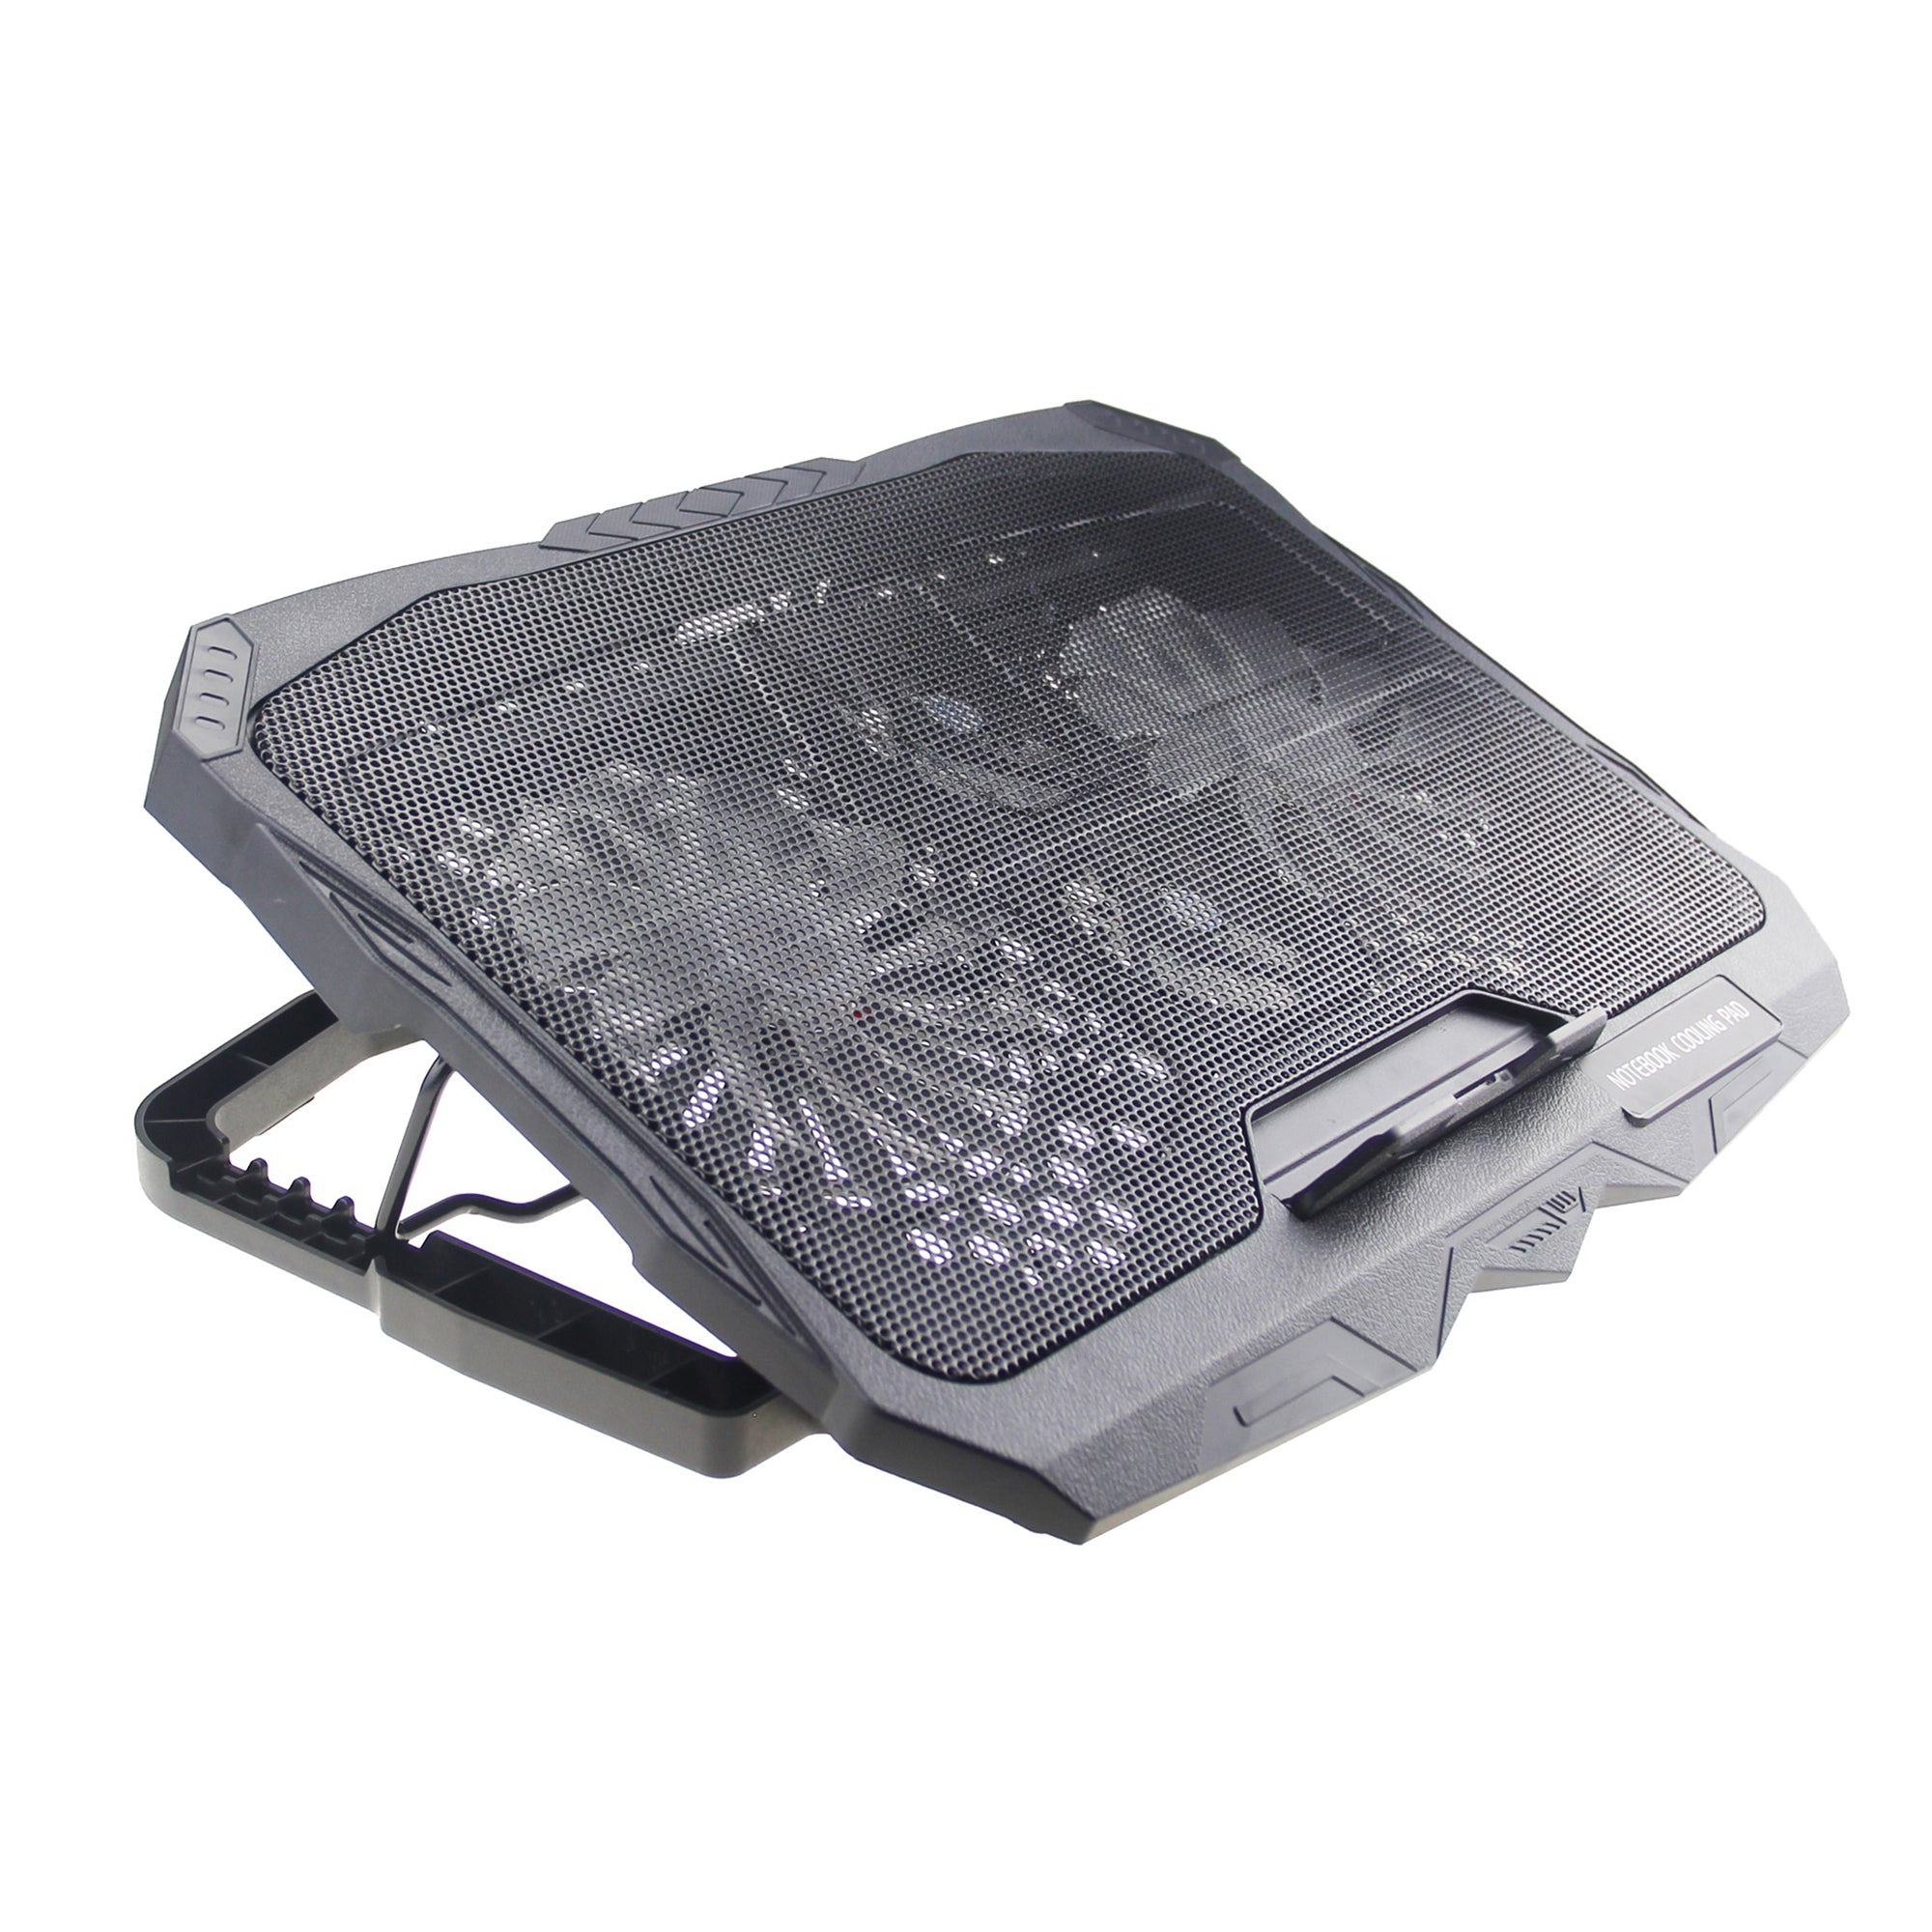 S18 Height Adjustable Notebook Router Radiator 4-Fan Cooler Desktop Laptop Cooling Pad - Red Light